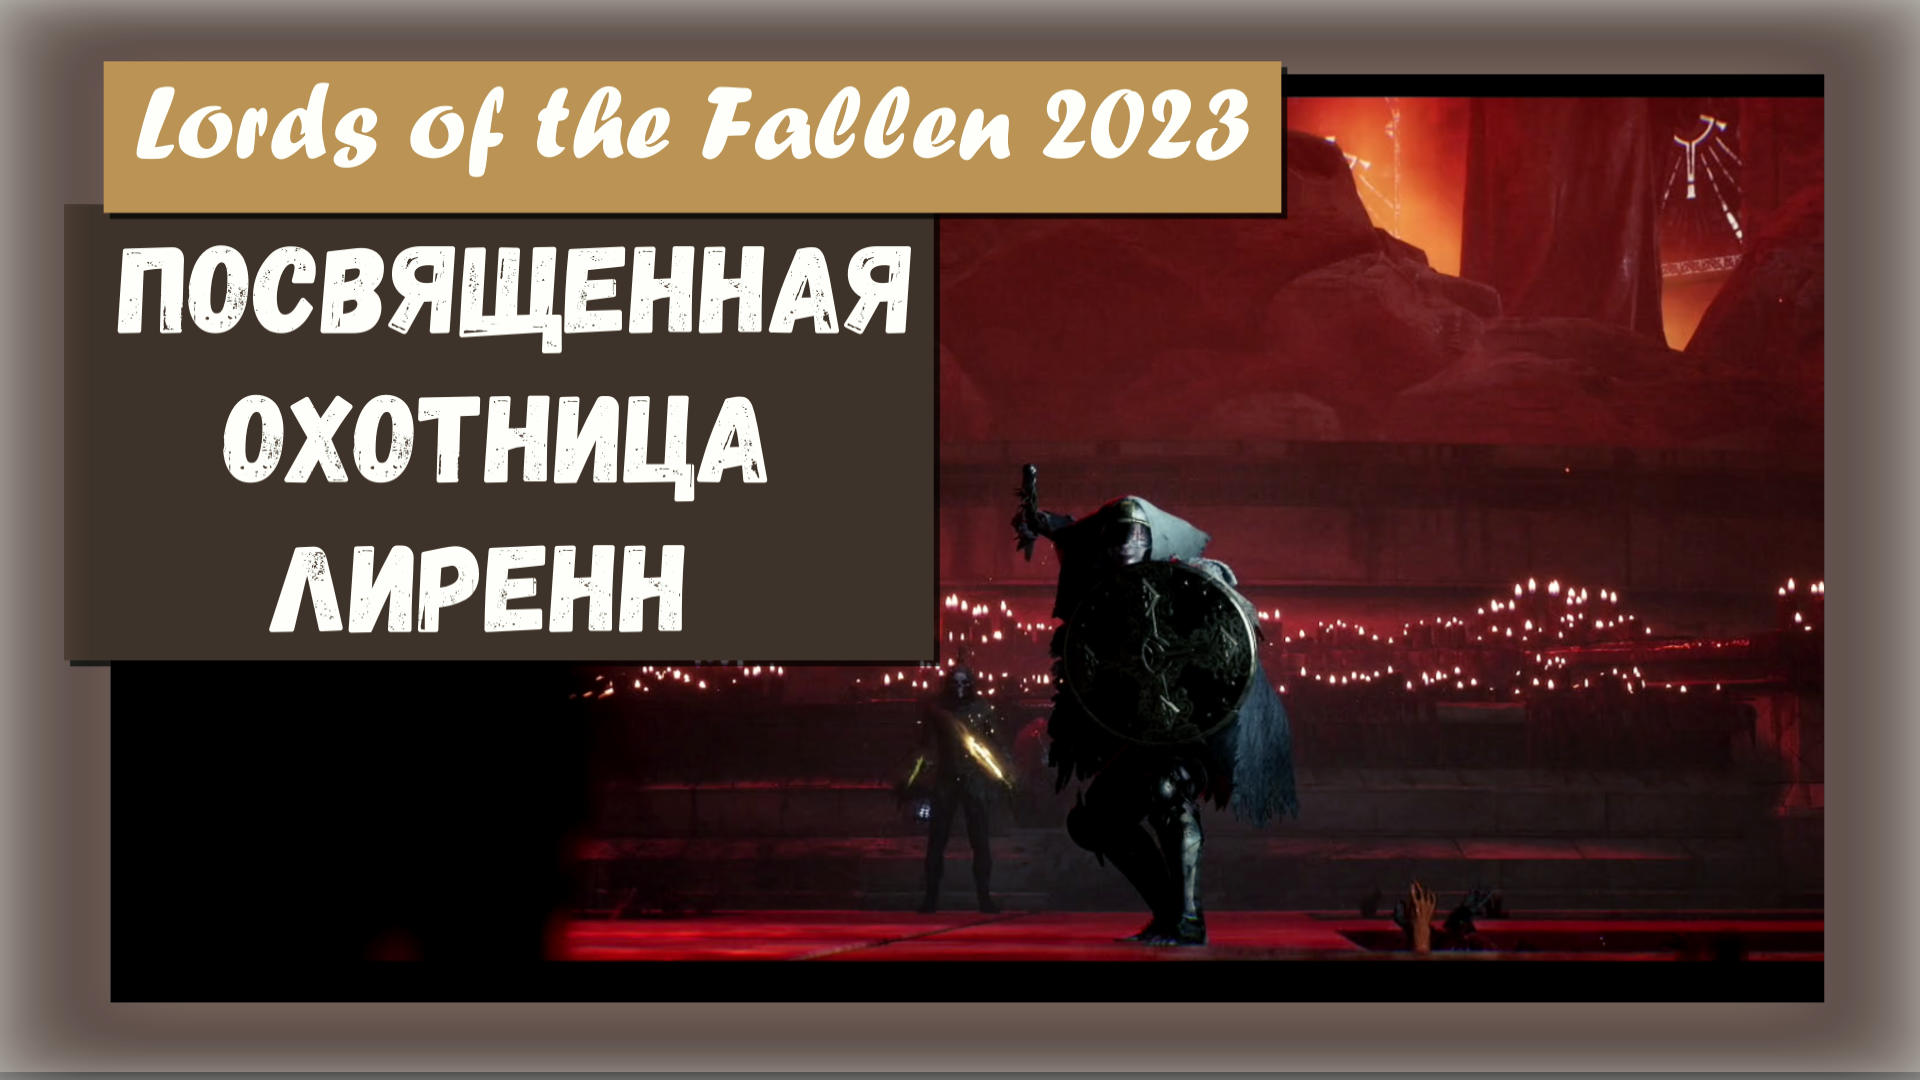 Lords of the Fallen 2023. Босс - Посвященная охотница Лиренн (Rapturous Huntress of the Dusk).